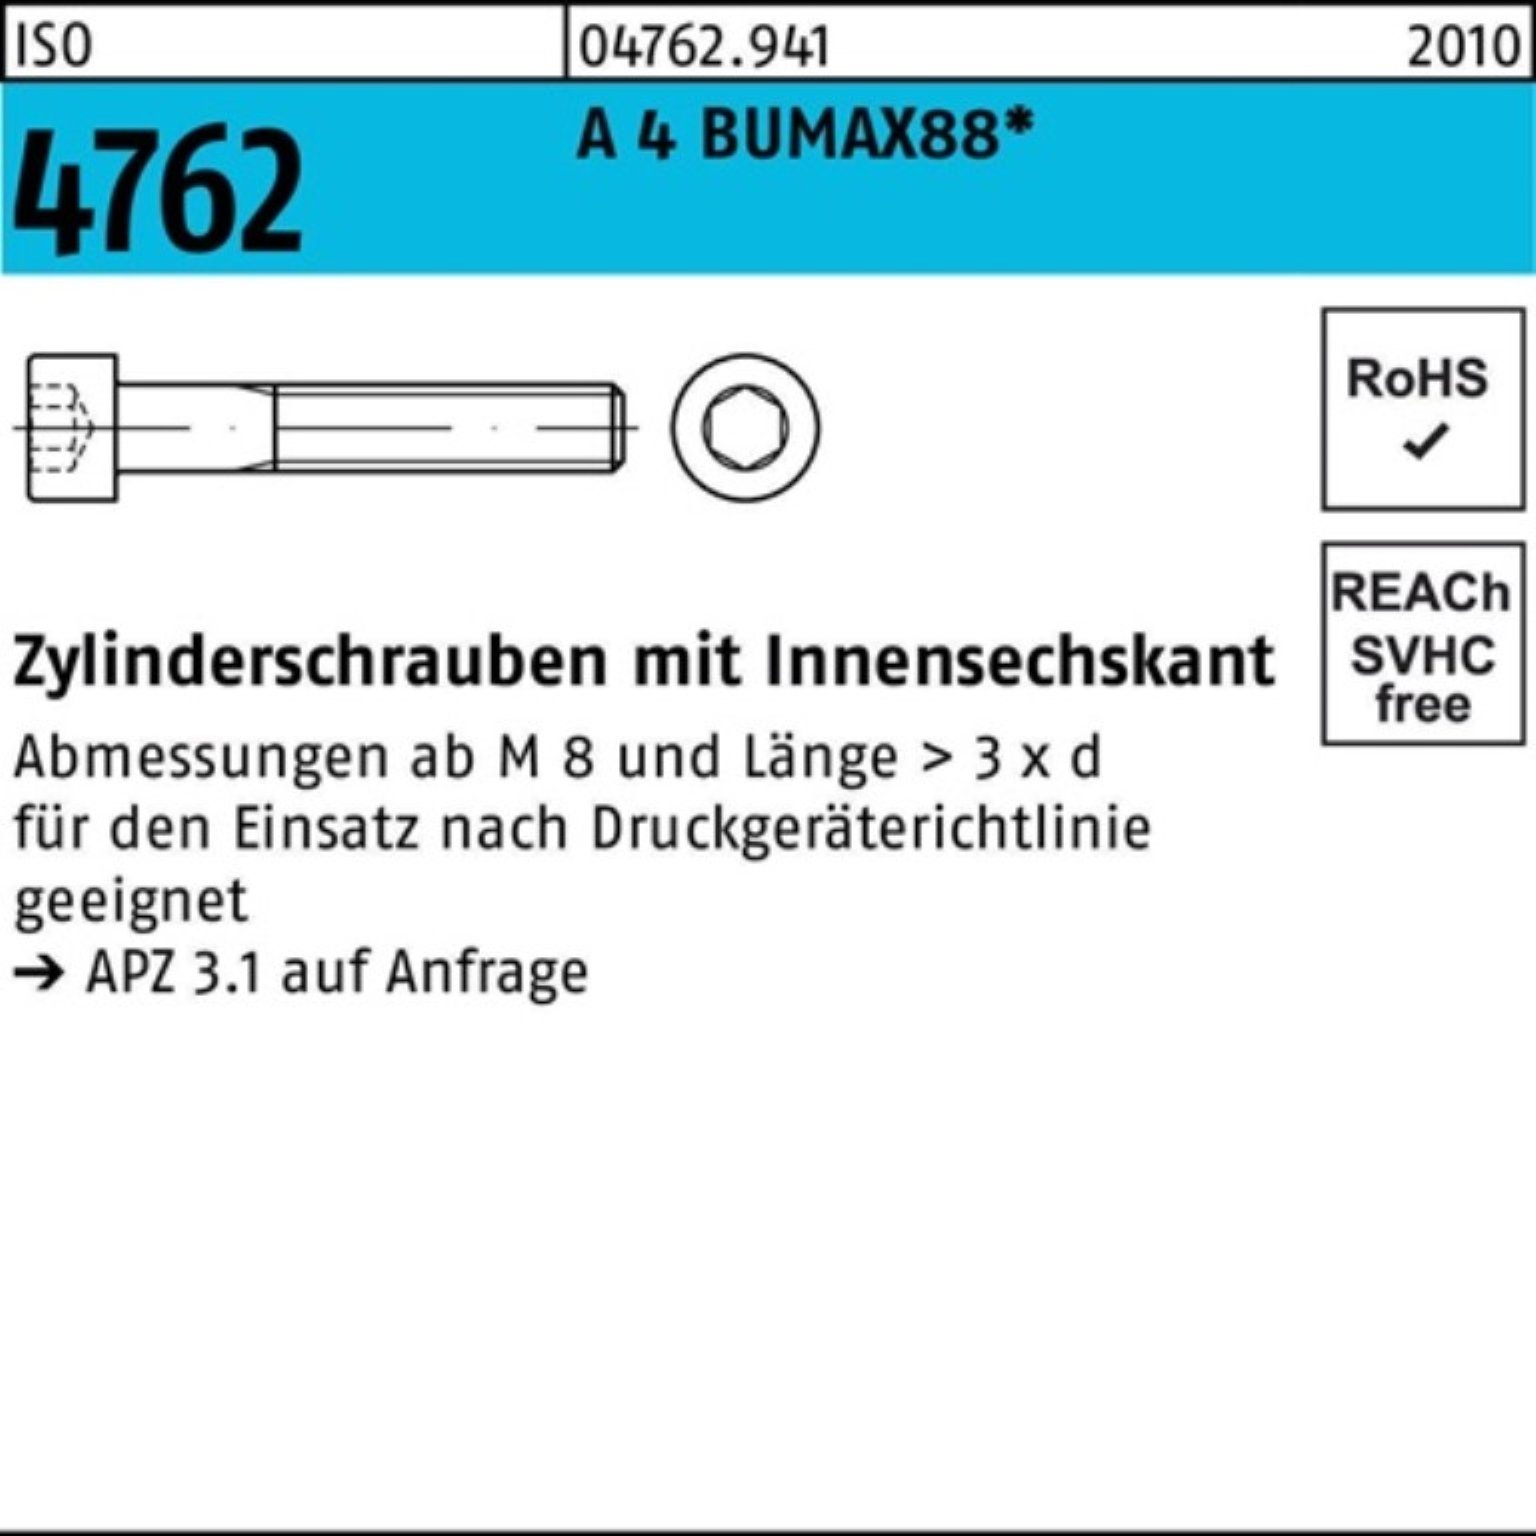 Bufab Zylinderschraube 100er Pack Zylinderschraube BUMAX88 A 100 ISO 4 12 M6x Innen-6kt 4762